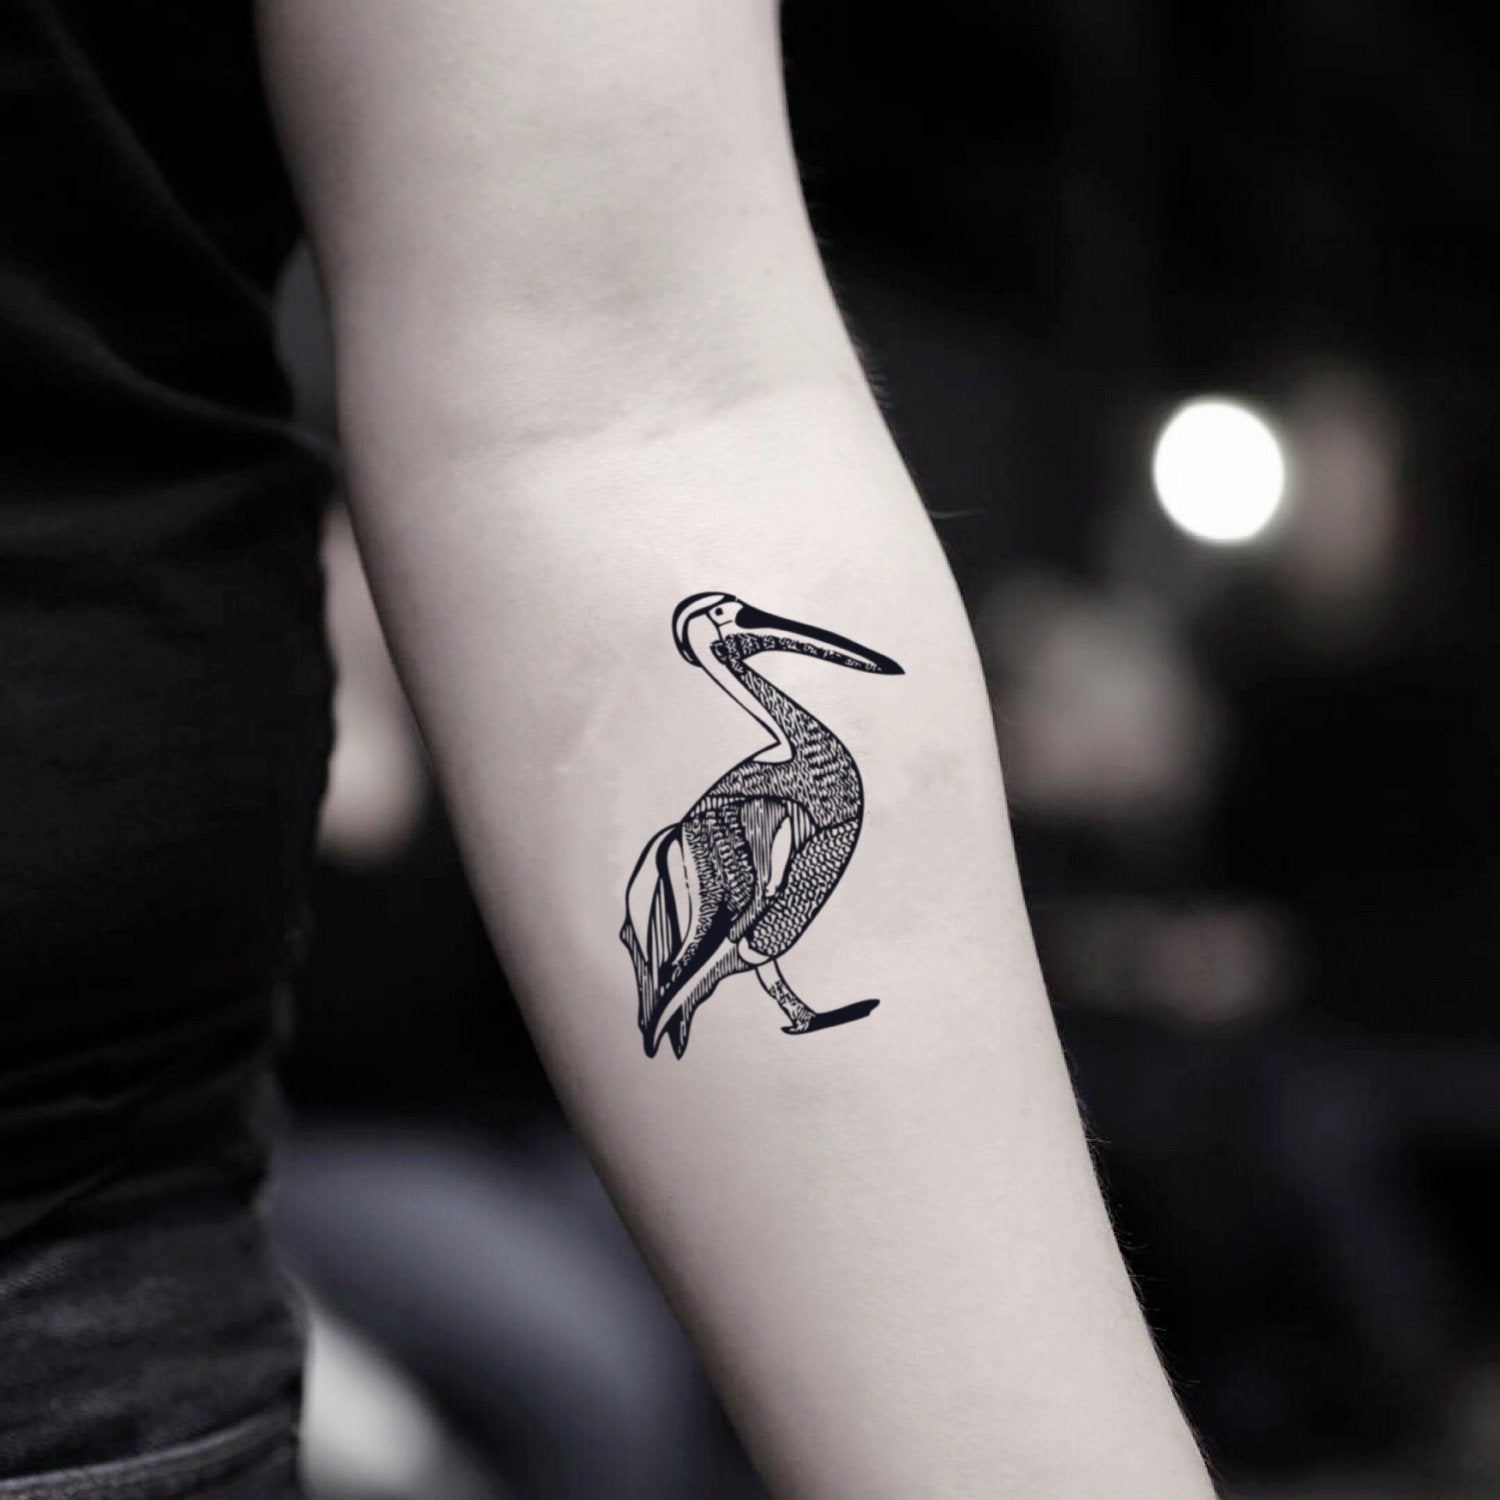 fake small pelican animal temporary tattoo sticker design idea on inner arm